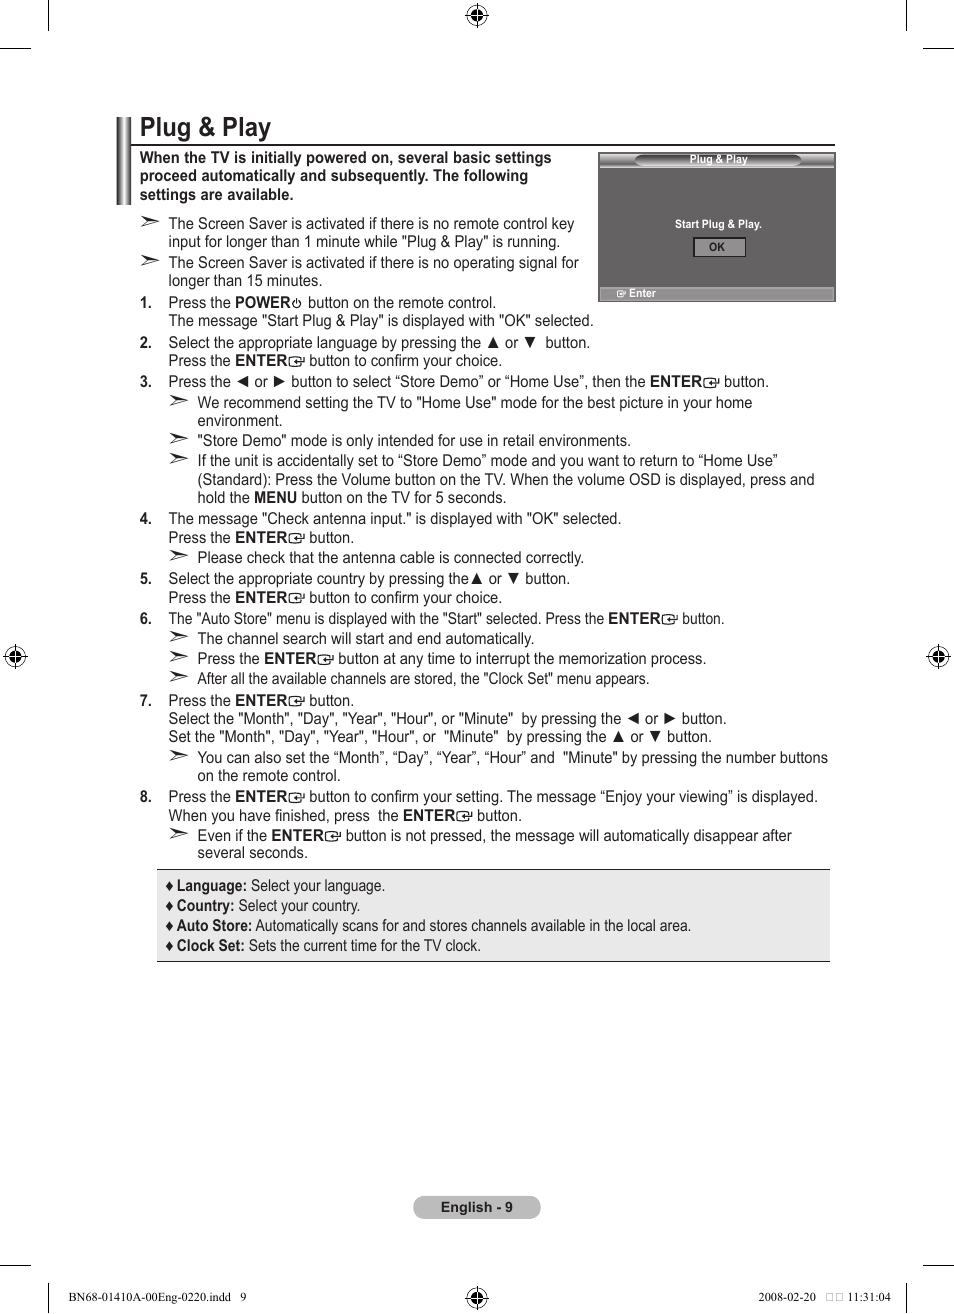 Plug & play | Samsung LE46A551P2R User Manual | Page 11 / 629